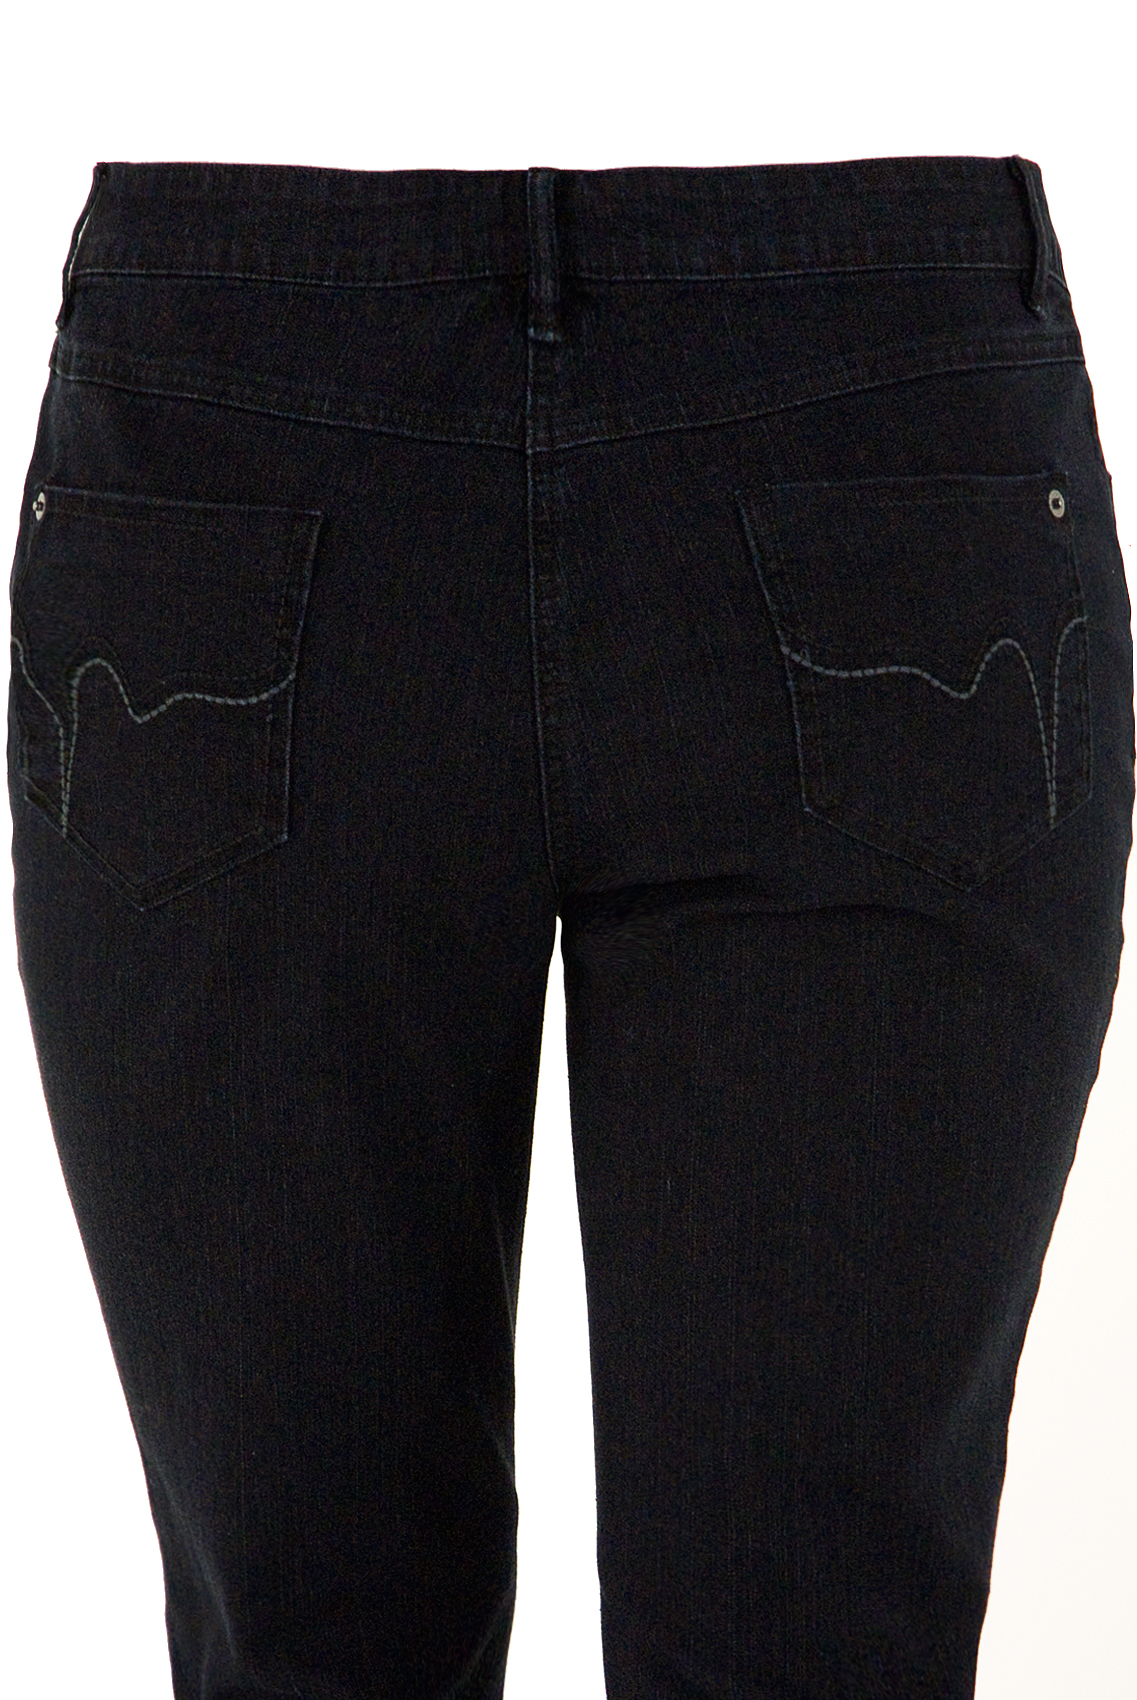 Black Basic Skinny Jeans Plus Size 14,16,18,20,22,24,26,28